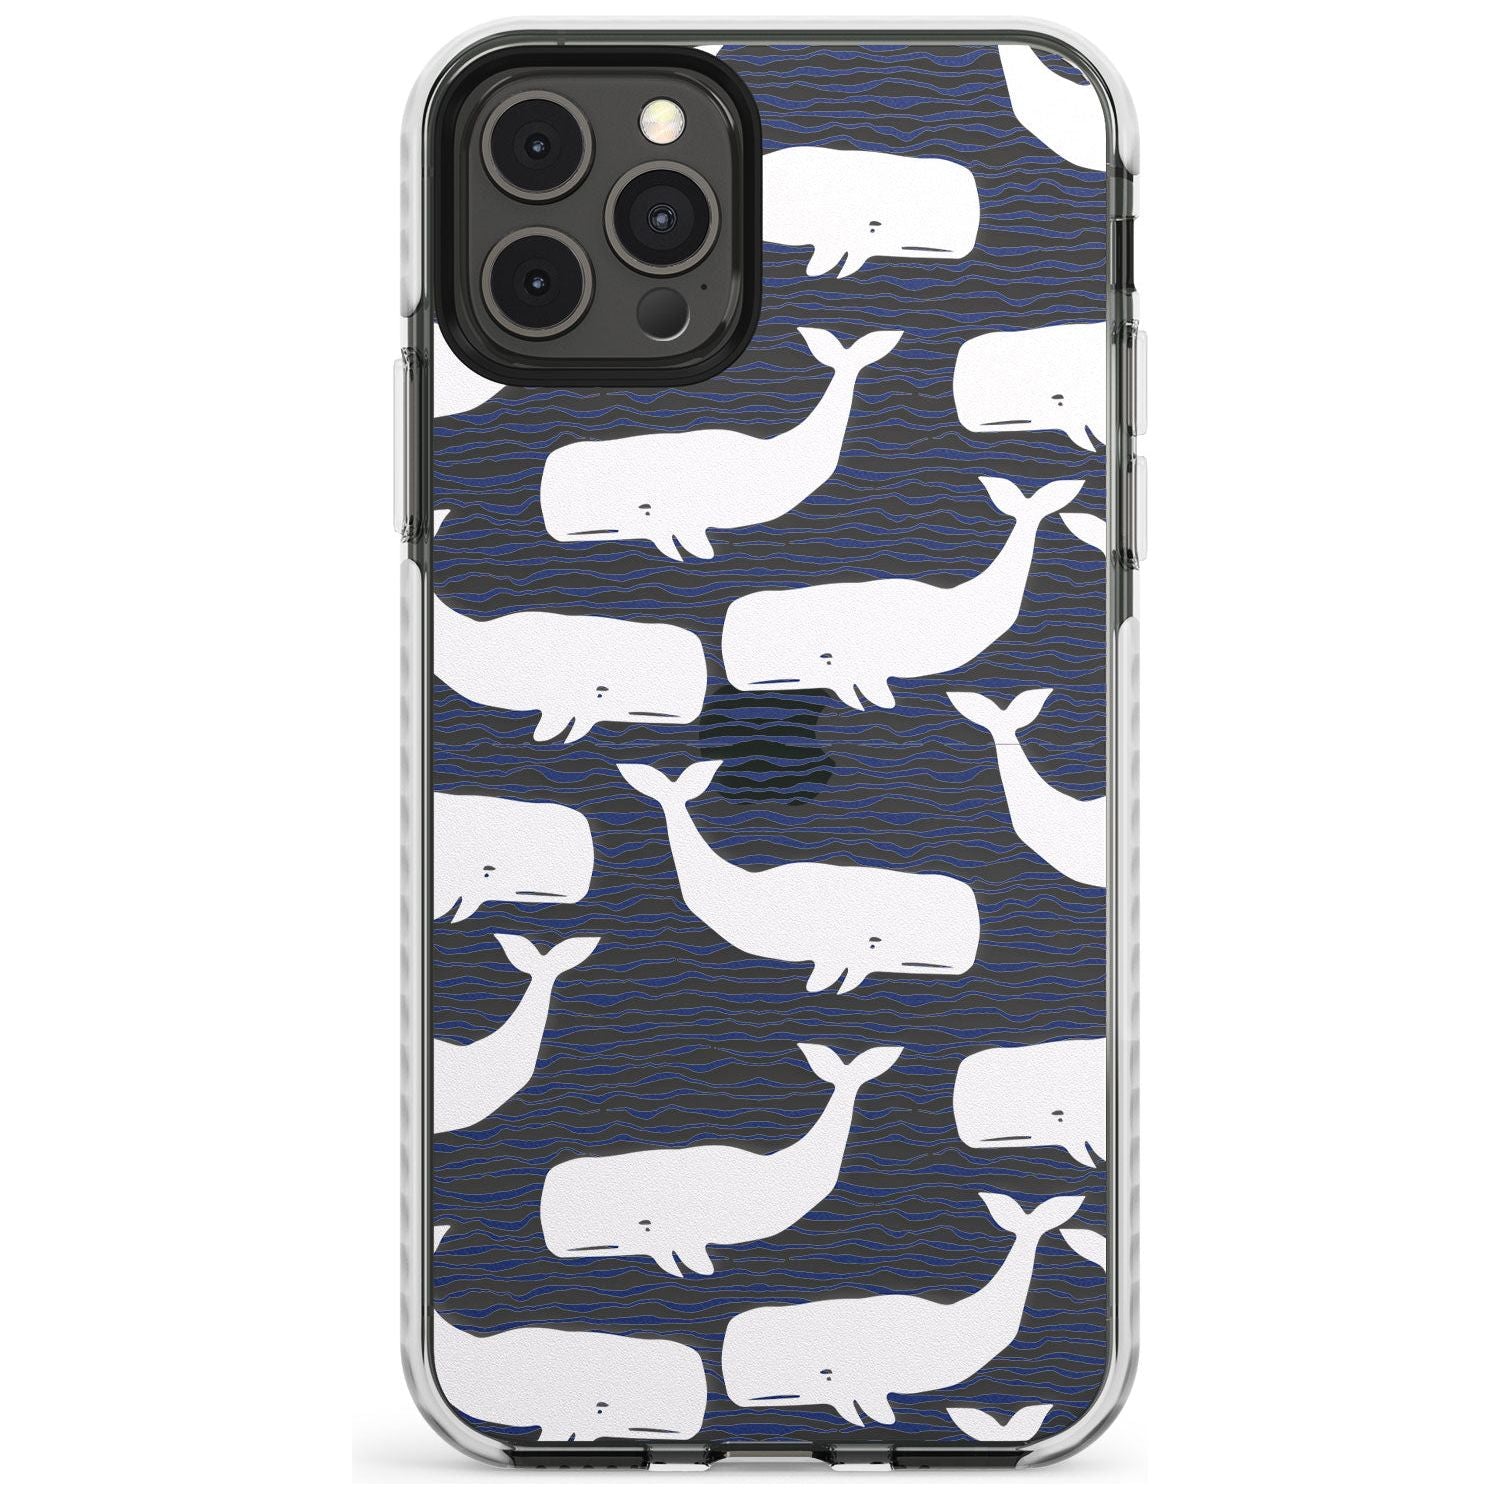 Cute Whales (Transparent) Slim TPU Phone Case for iPhone 11 Pro Max